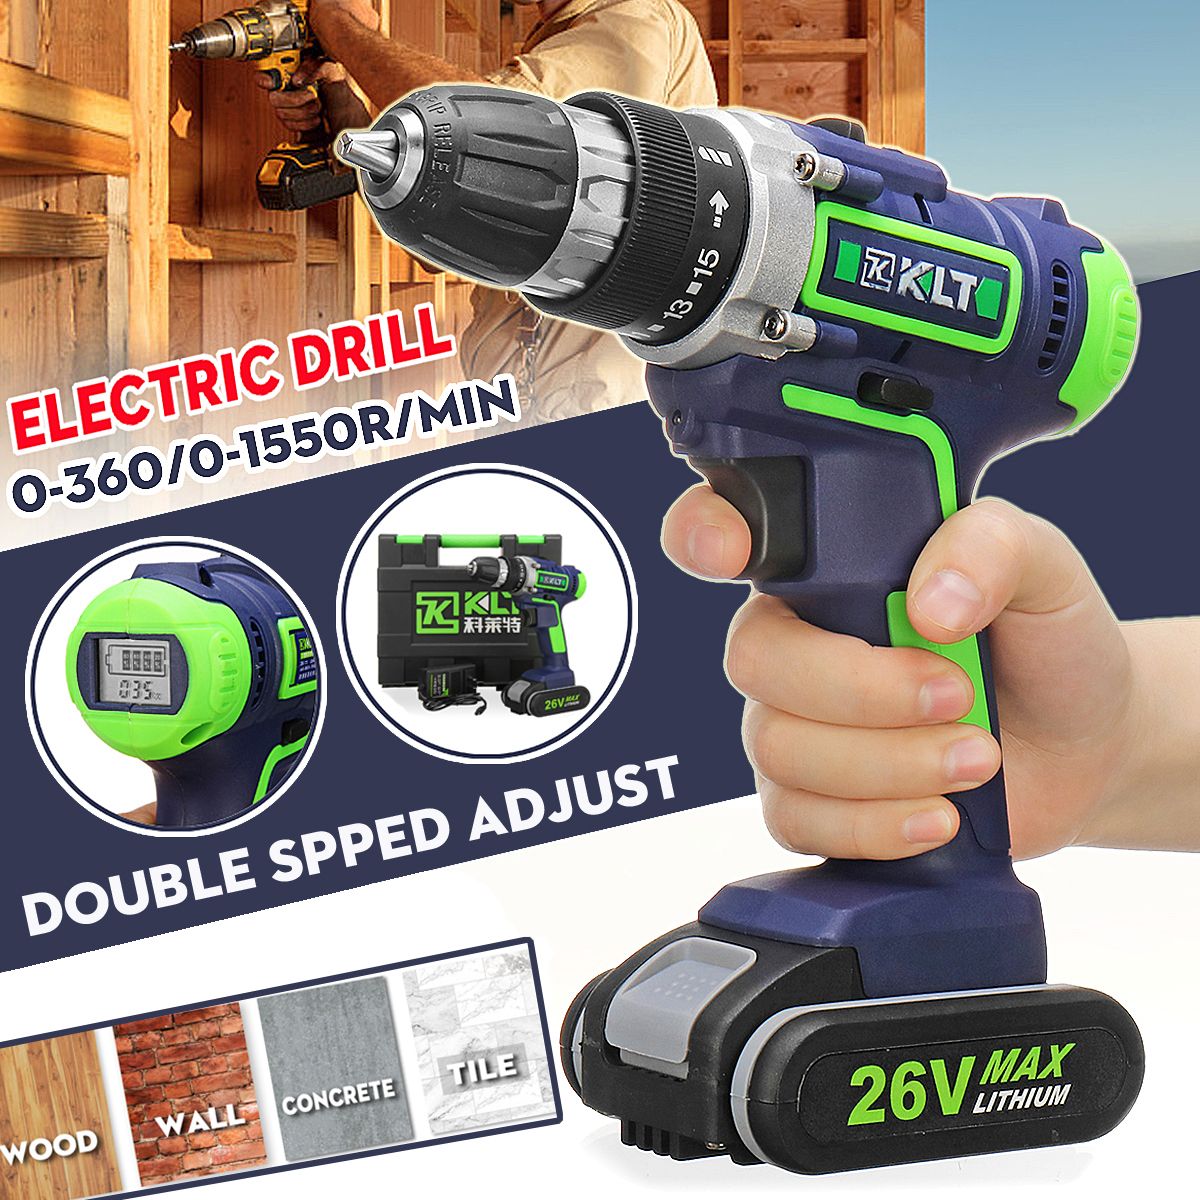 26V-Electric-Cordless-Drill-LCD-Display-15-Torque-Double-Speed-Adjustbale-Power-Drills-W-Li-Ion-Batt-1429742